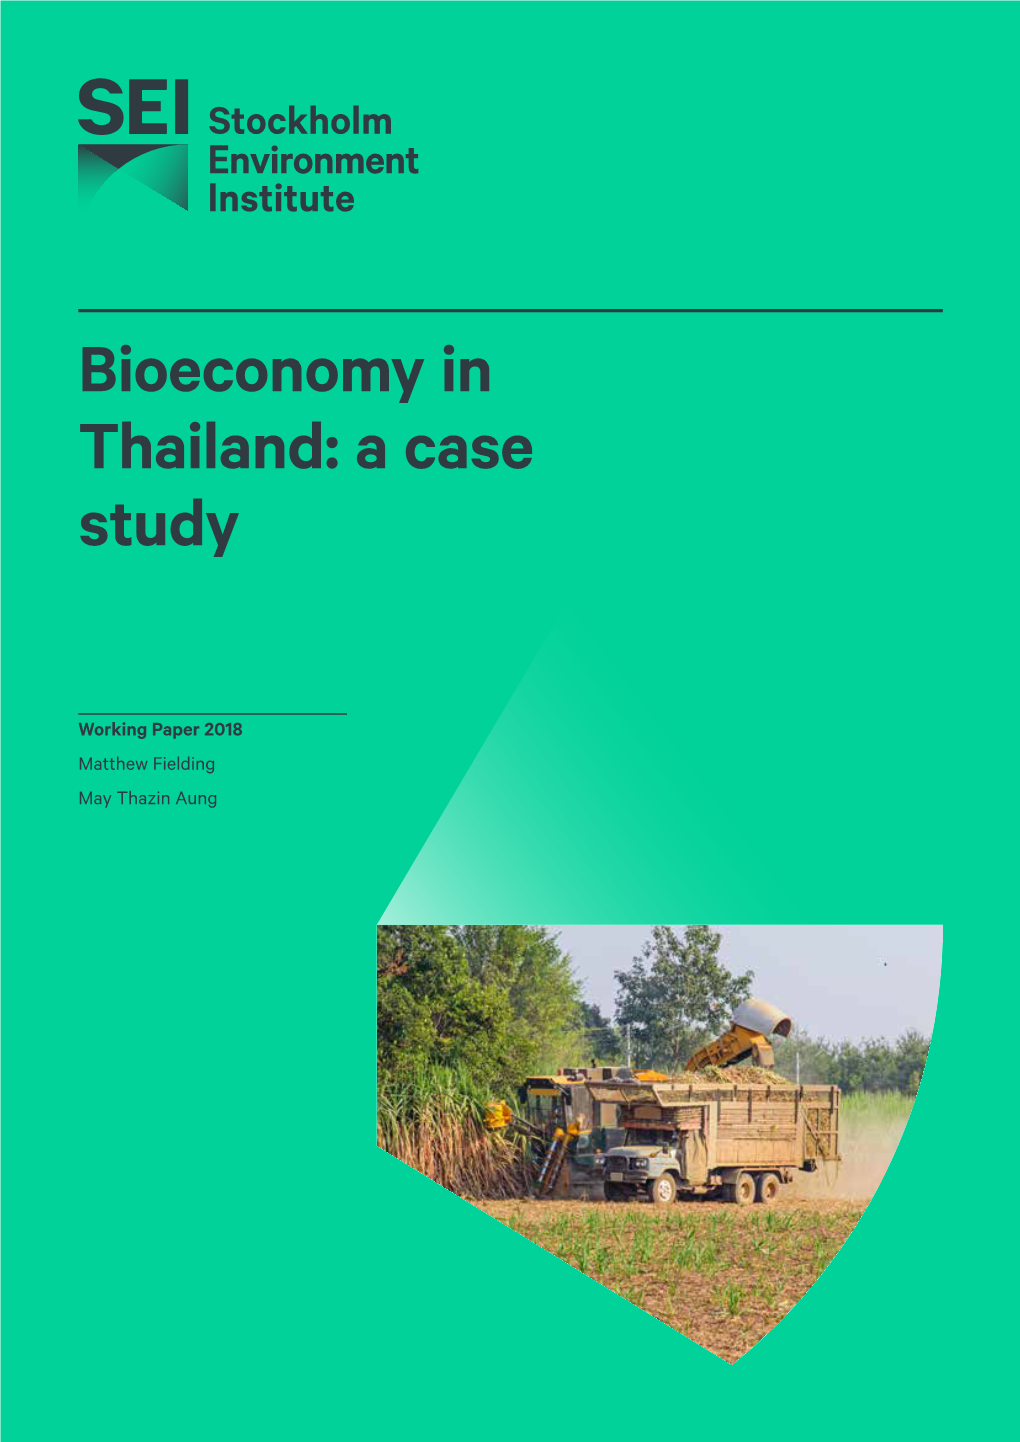 Bioeconomy in Thailand: a Case Study